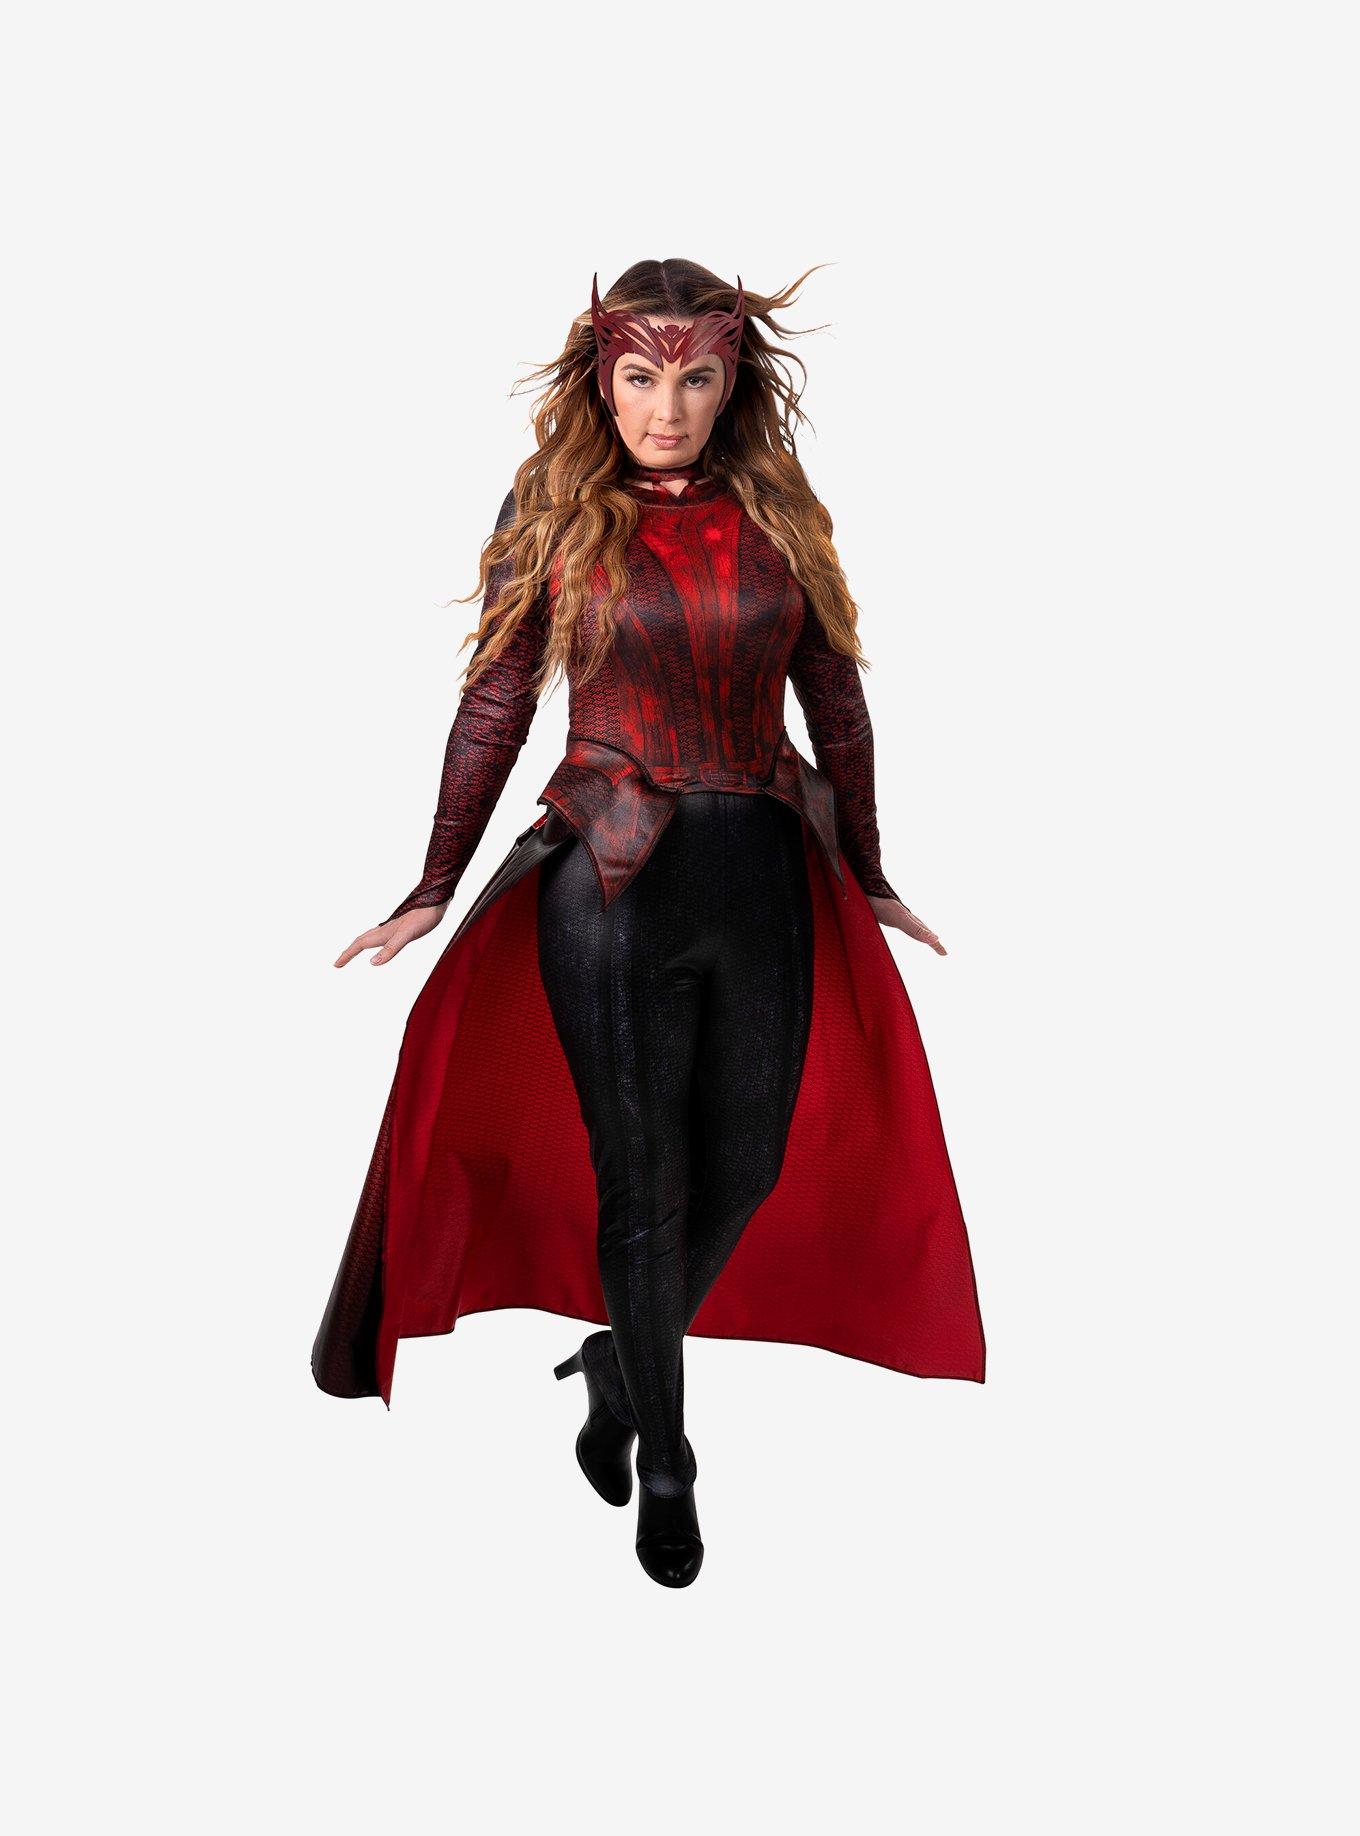 Wanda Maximoff Icon  Scarlet witch marvel, Scarlet witch, Crazy girls